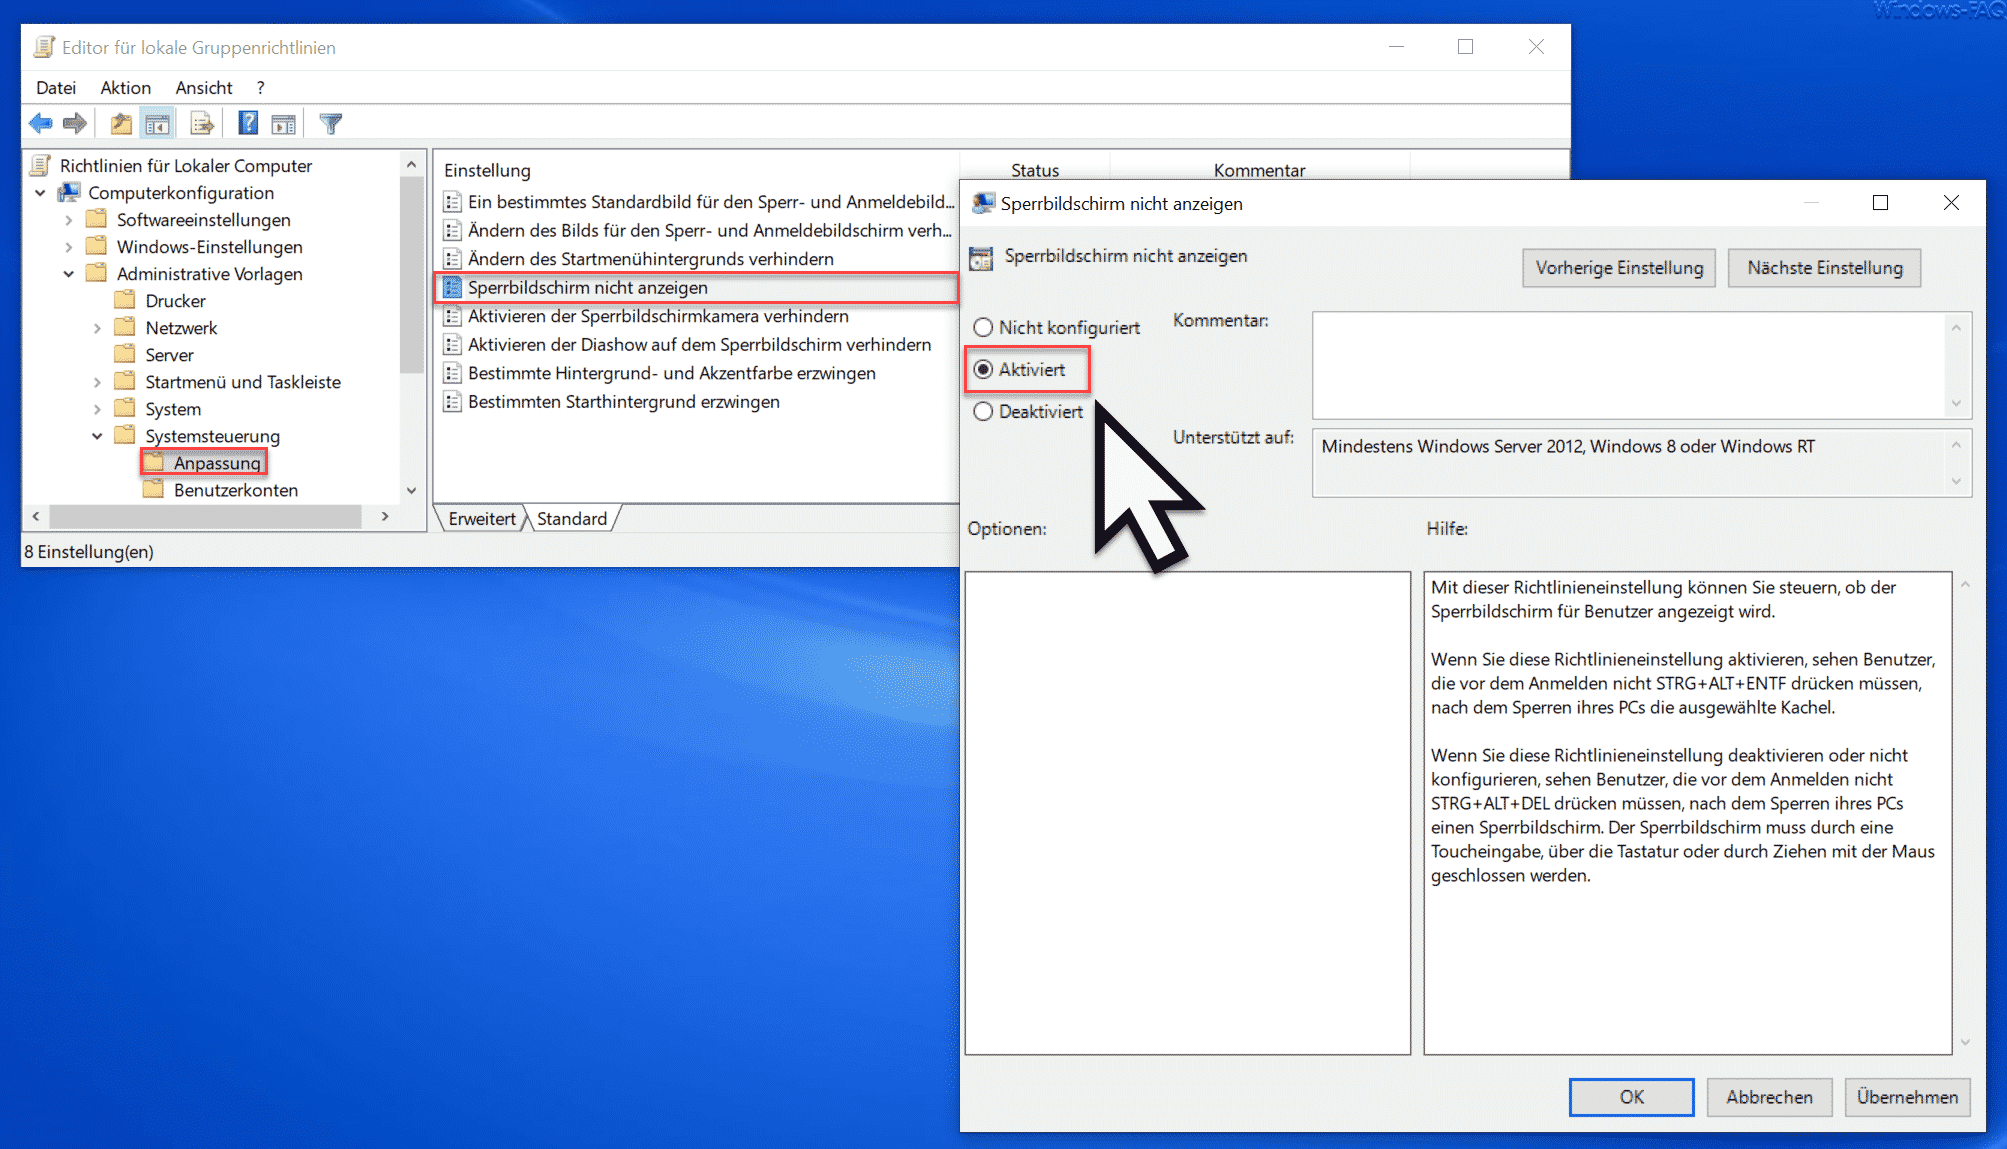 Sperrbildschirm deaktivieren per GPO bei Windows 10